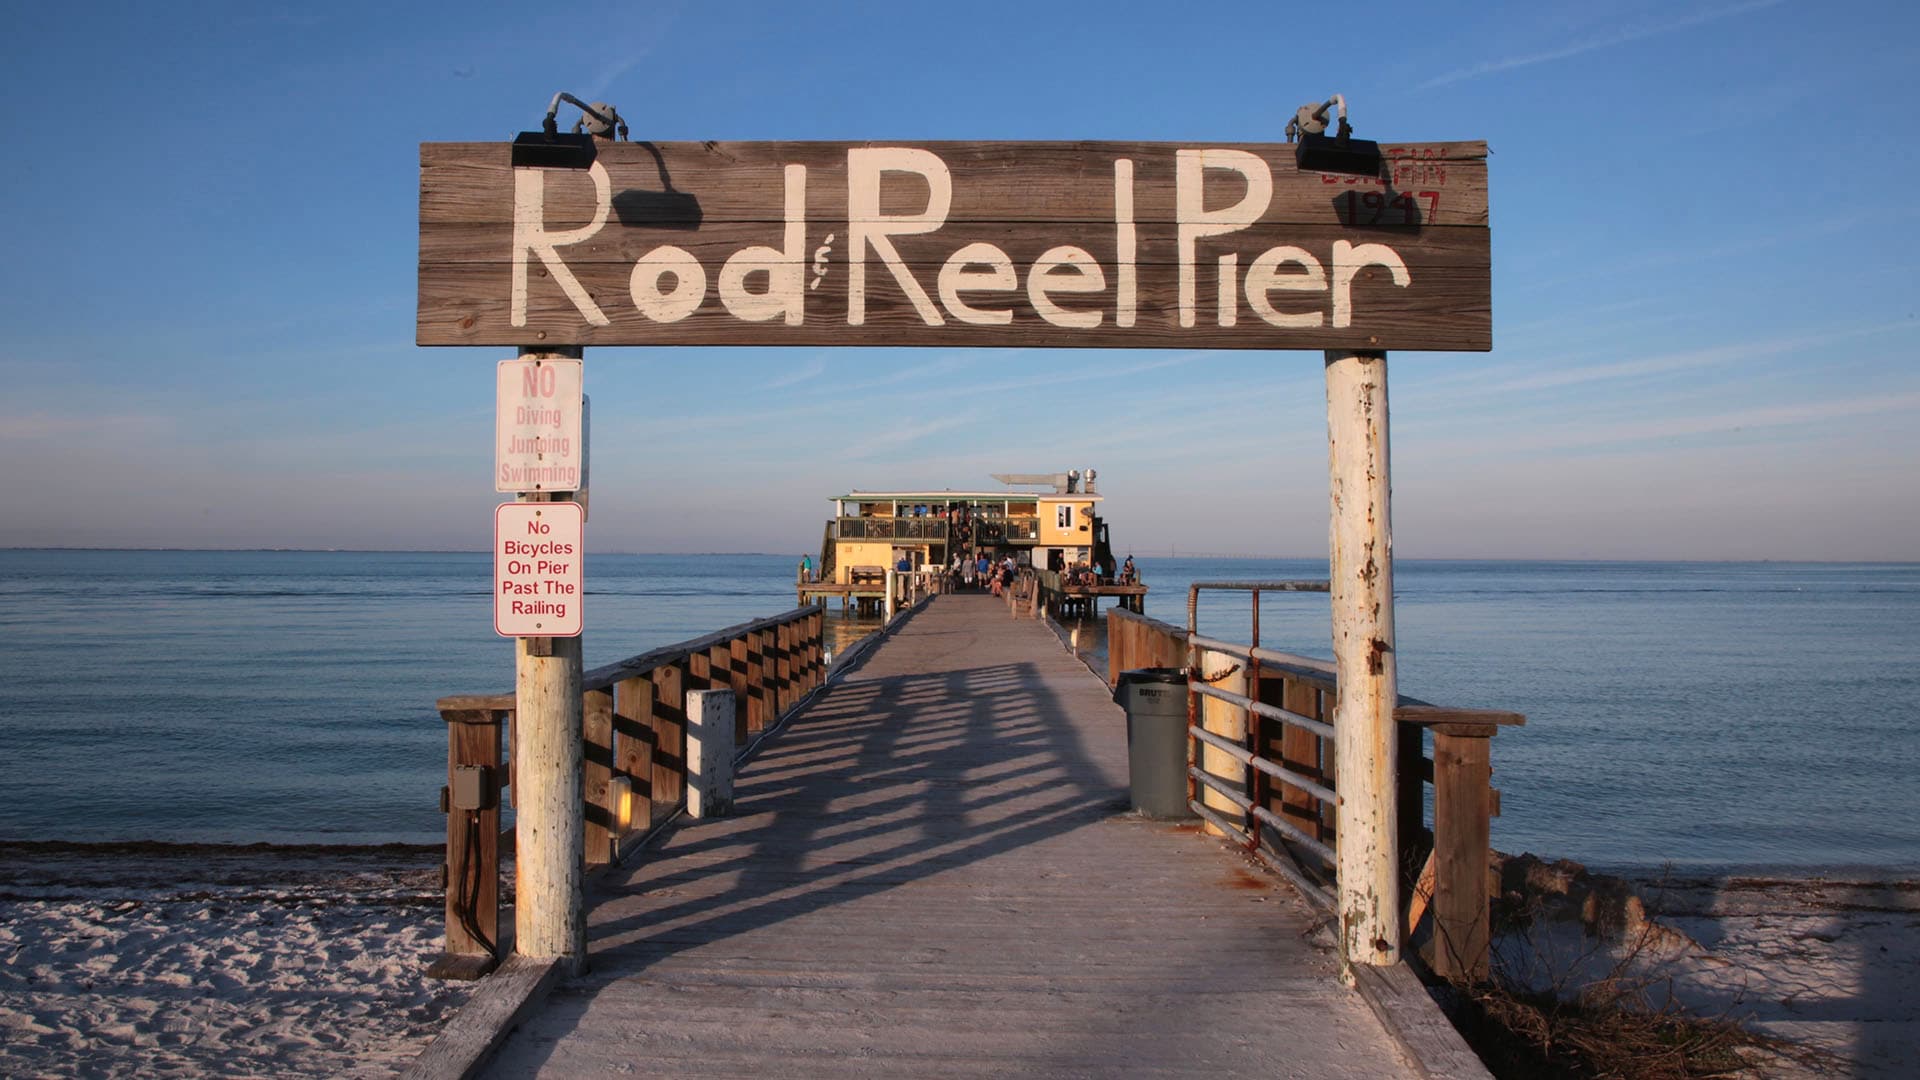 The Rod & Reel Pier’s restaurant serves fresh fish, shrimp, scallops and more.